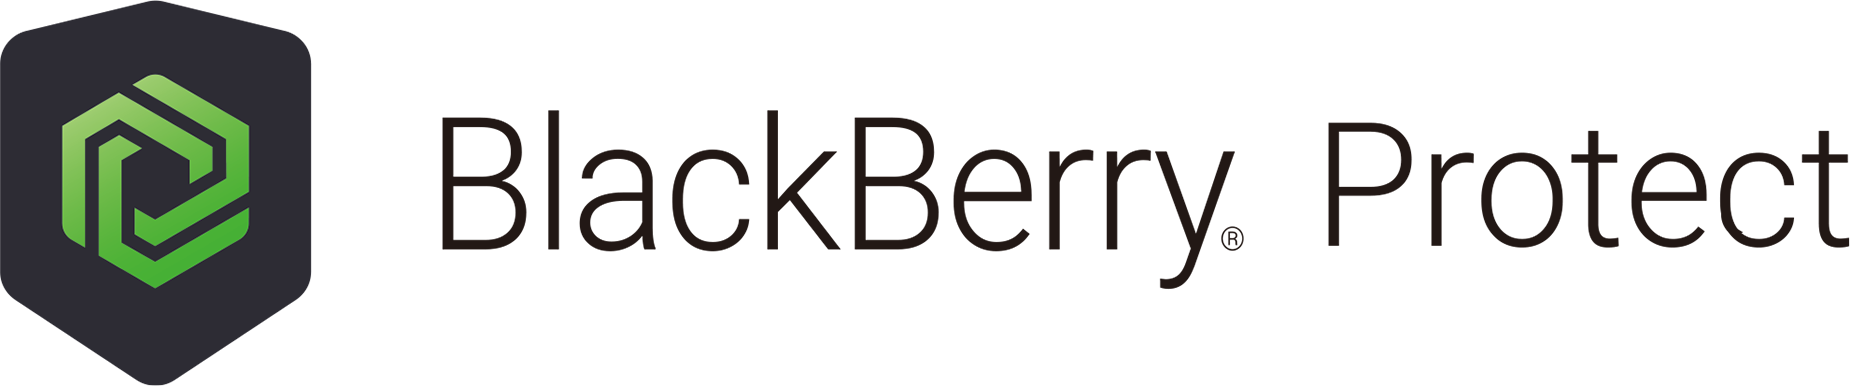 BlackBerry Protectロゴ